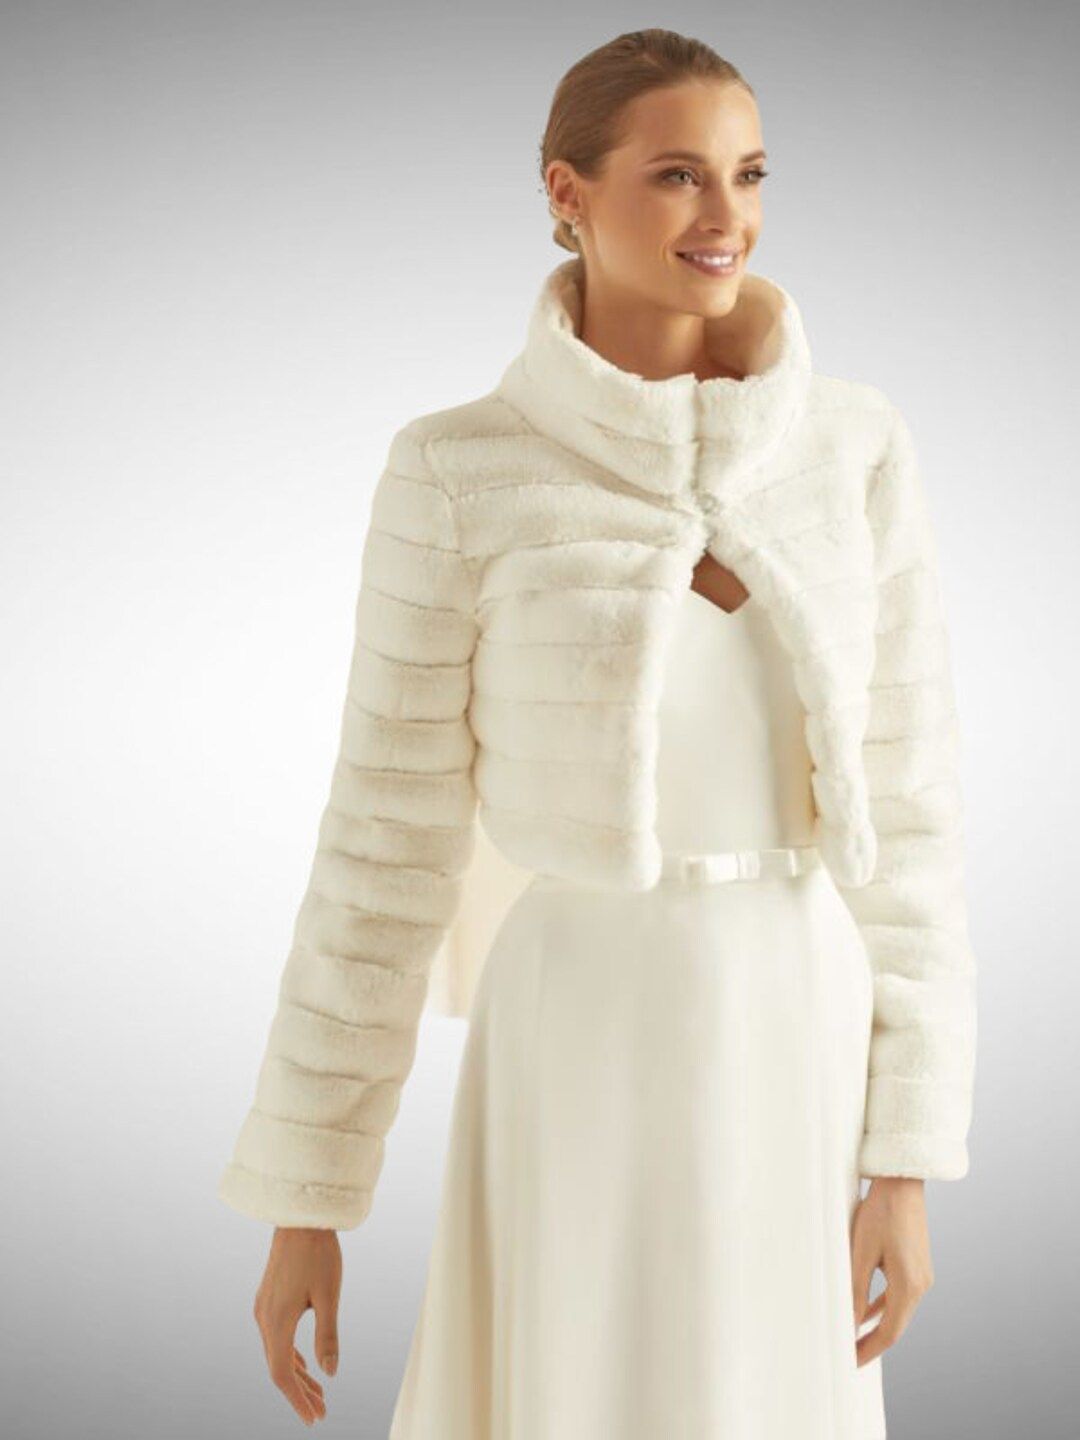 Stunning ivory faux fur bridal jacket, Wedding Dress Accessories 50% SALE | Etsy (UK)